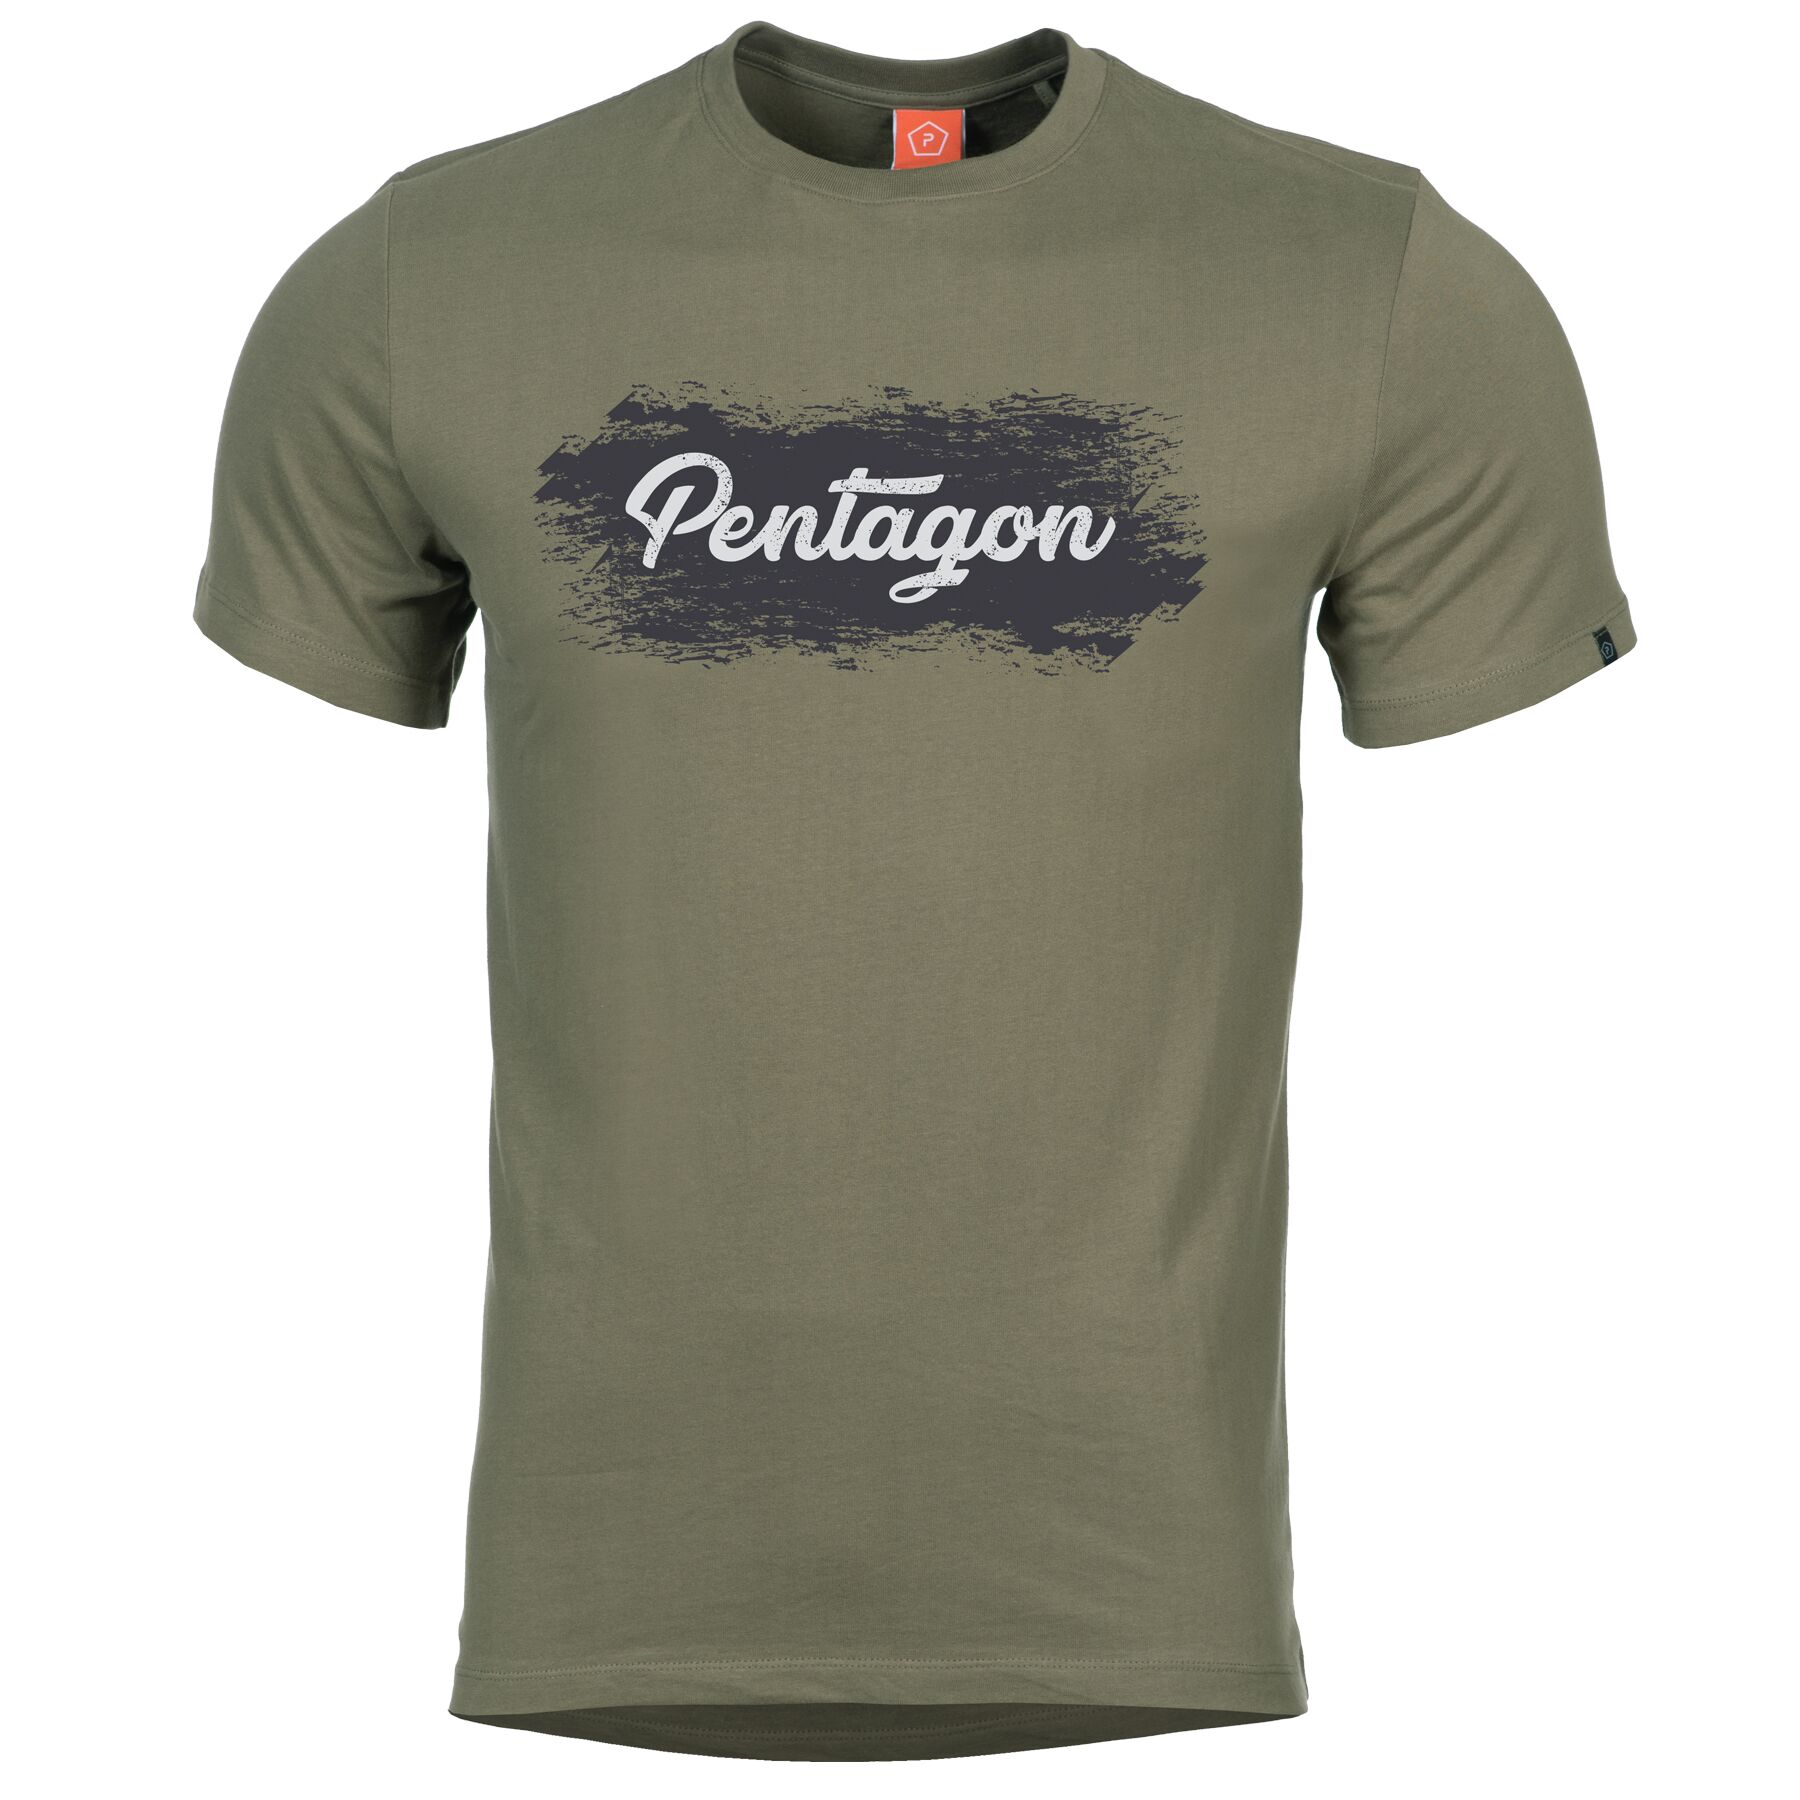 Tričko Pentagon Grunge s potlačou - oliva